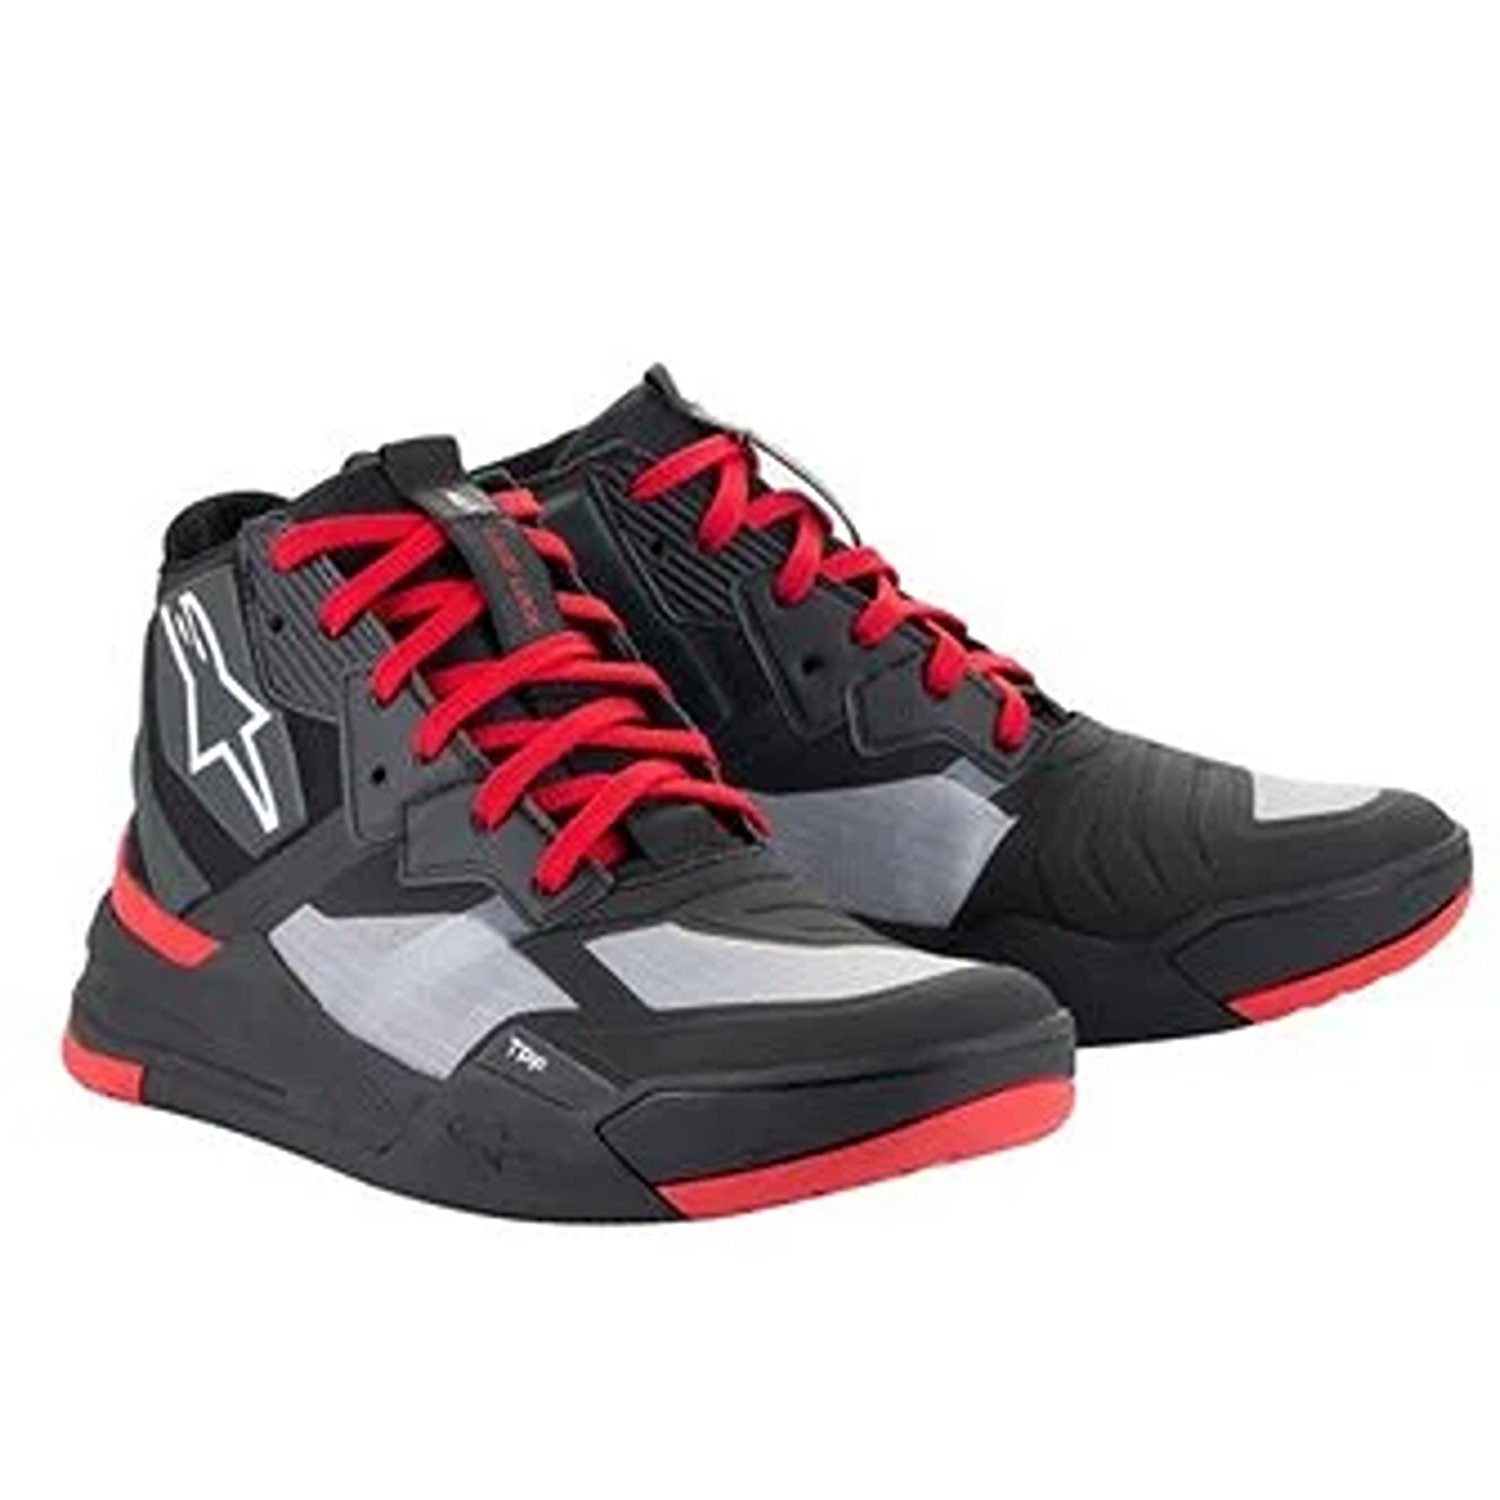 Image of Alpinestars Speedflight Shoes Black Bright Red White Size US 13 ID 8059347263014